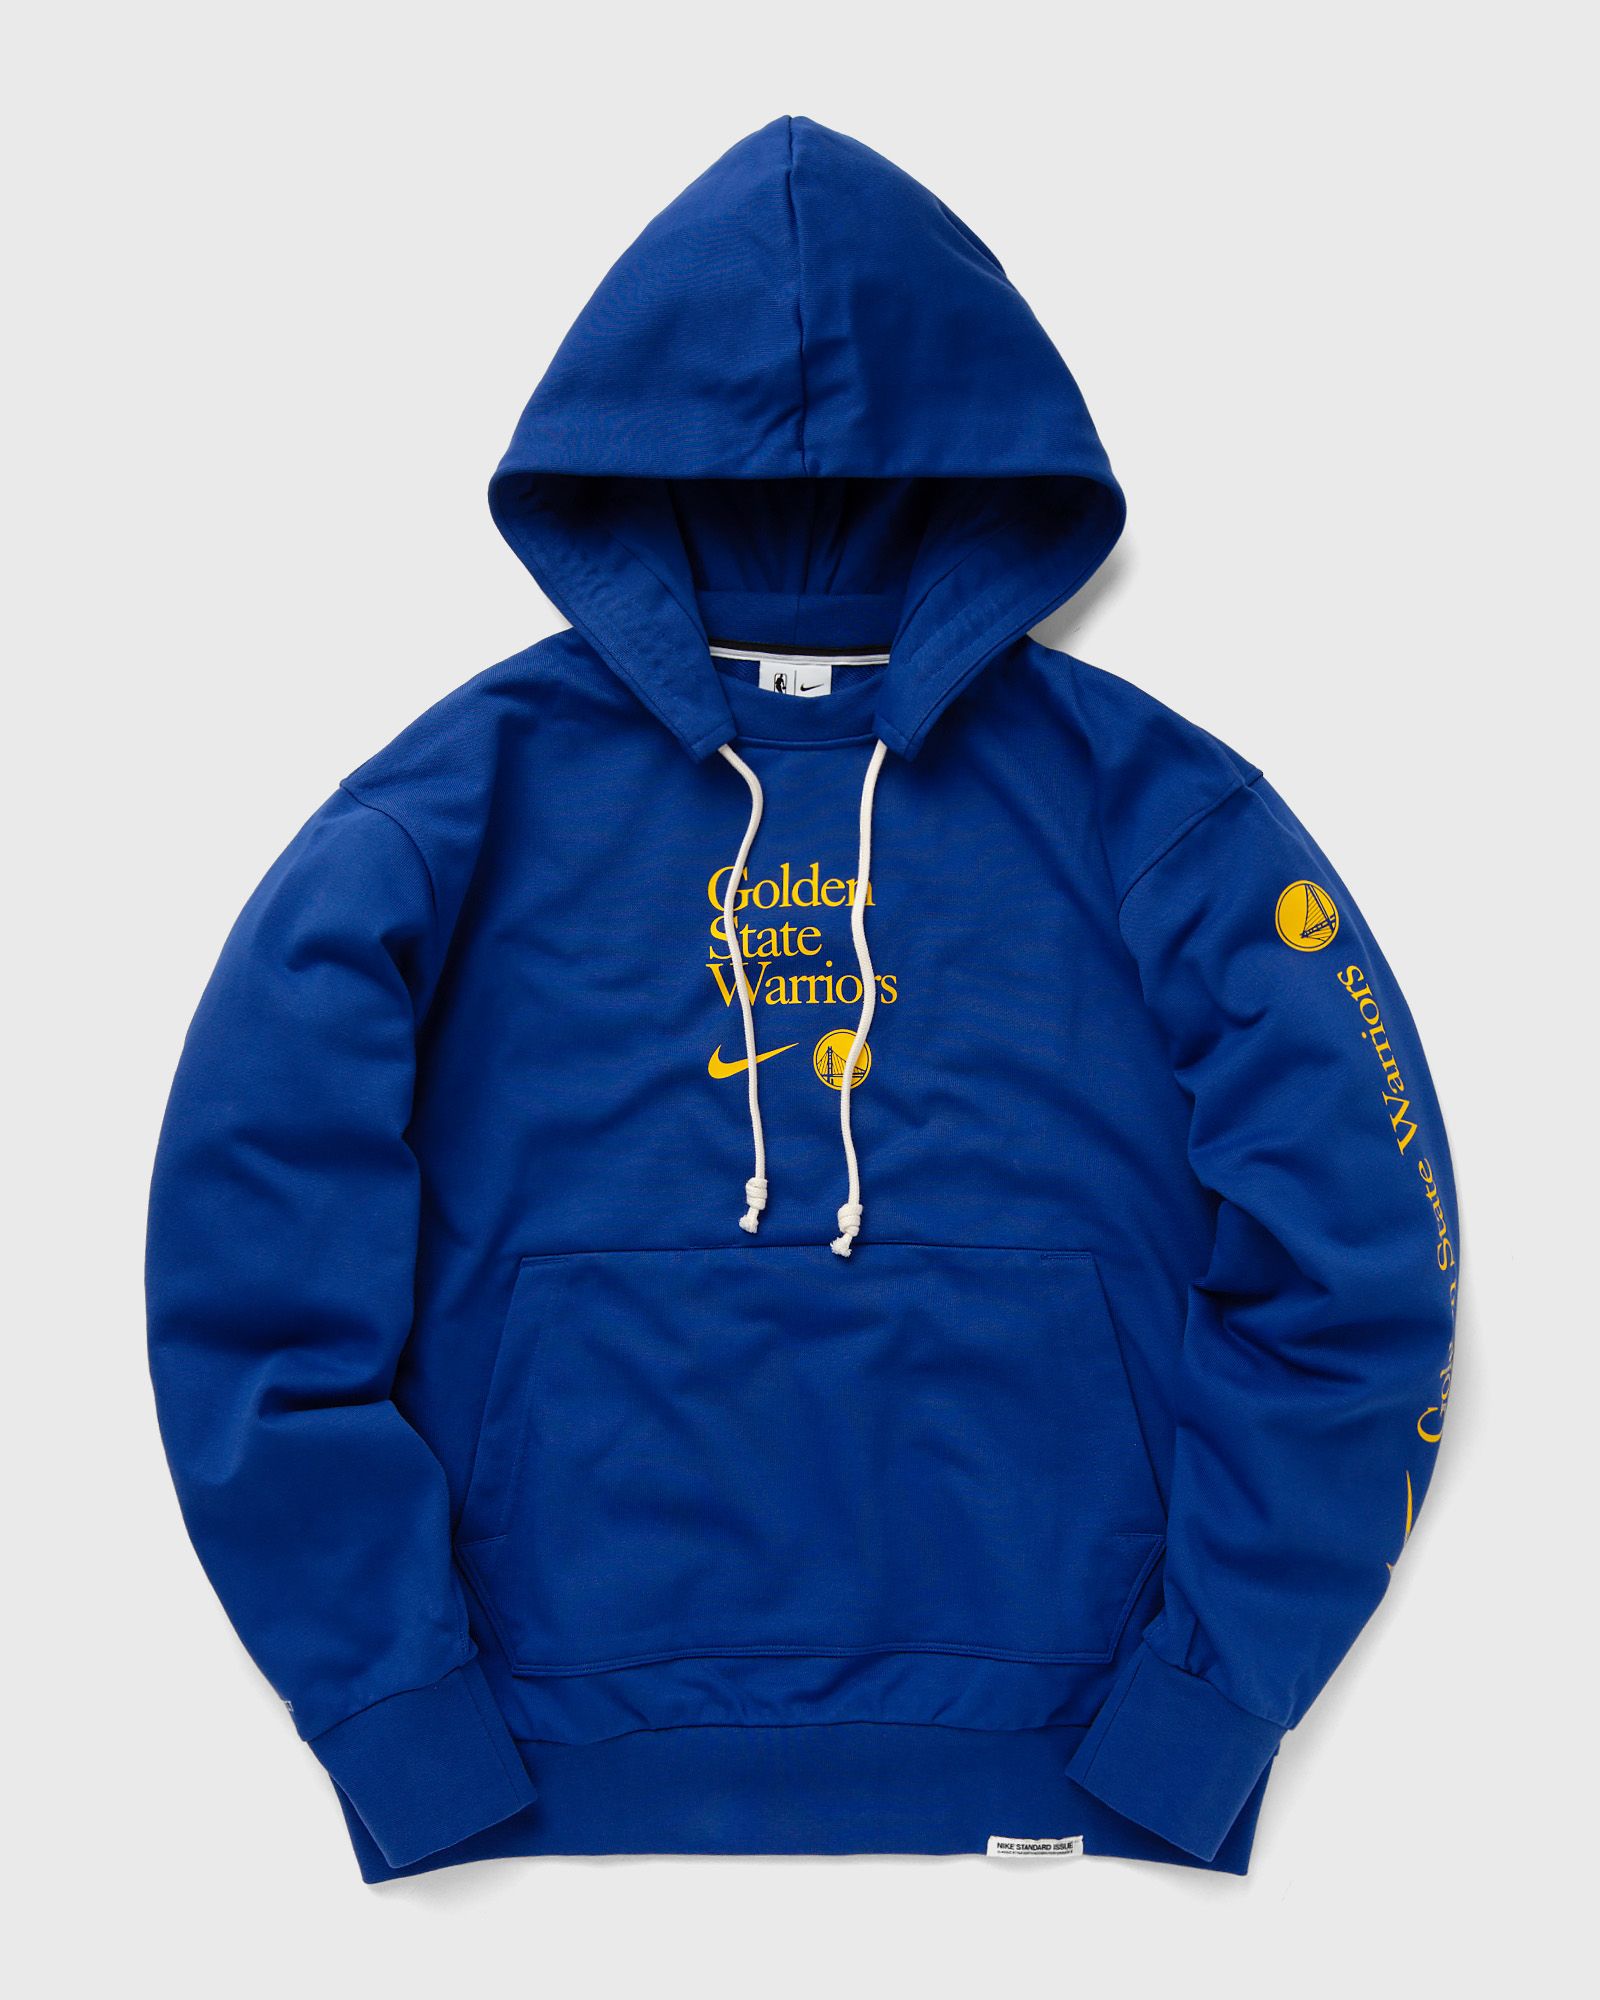 Nike - nba golden state warriors standard issue hoodie men hoodies|team sweats blue in größe:xxl